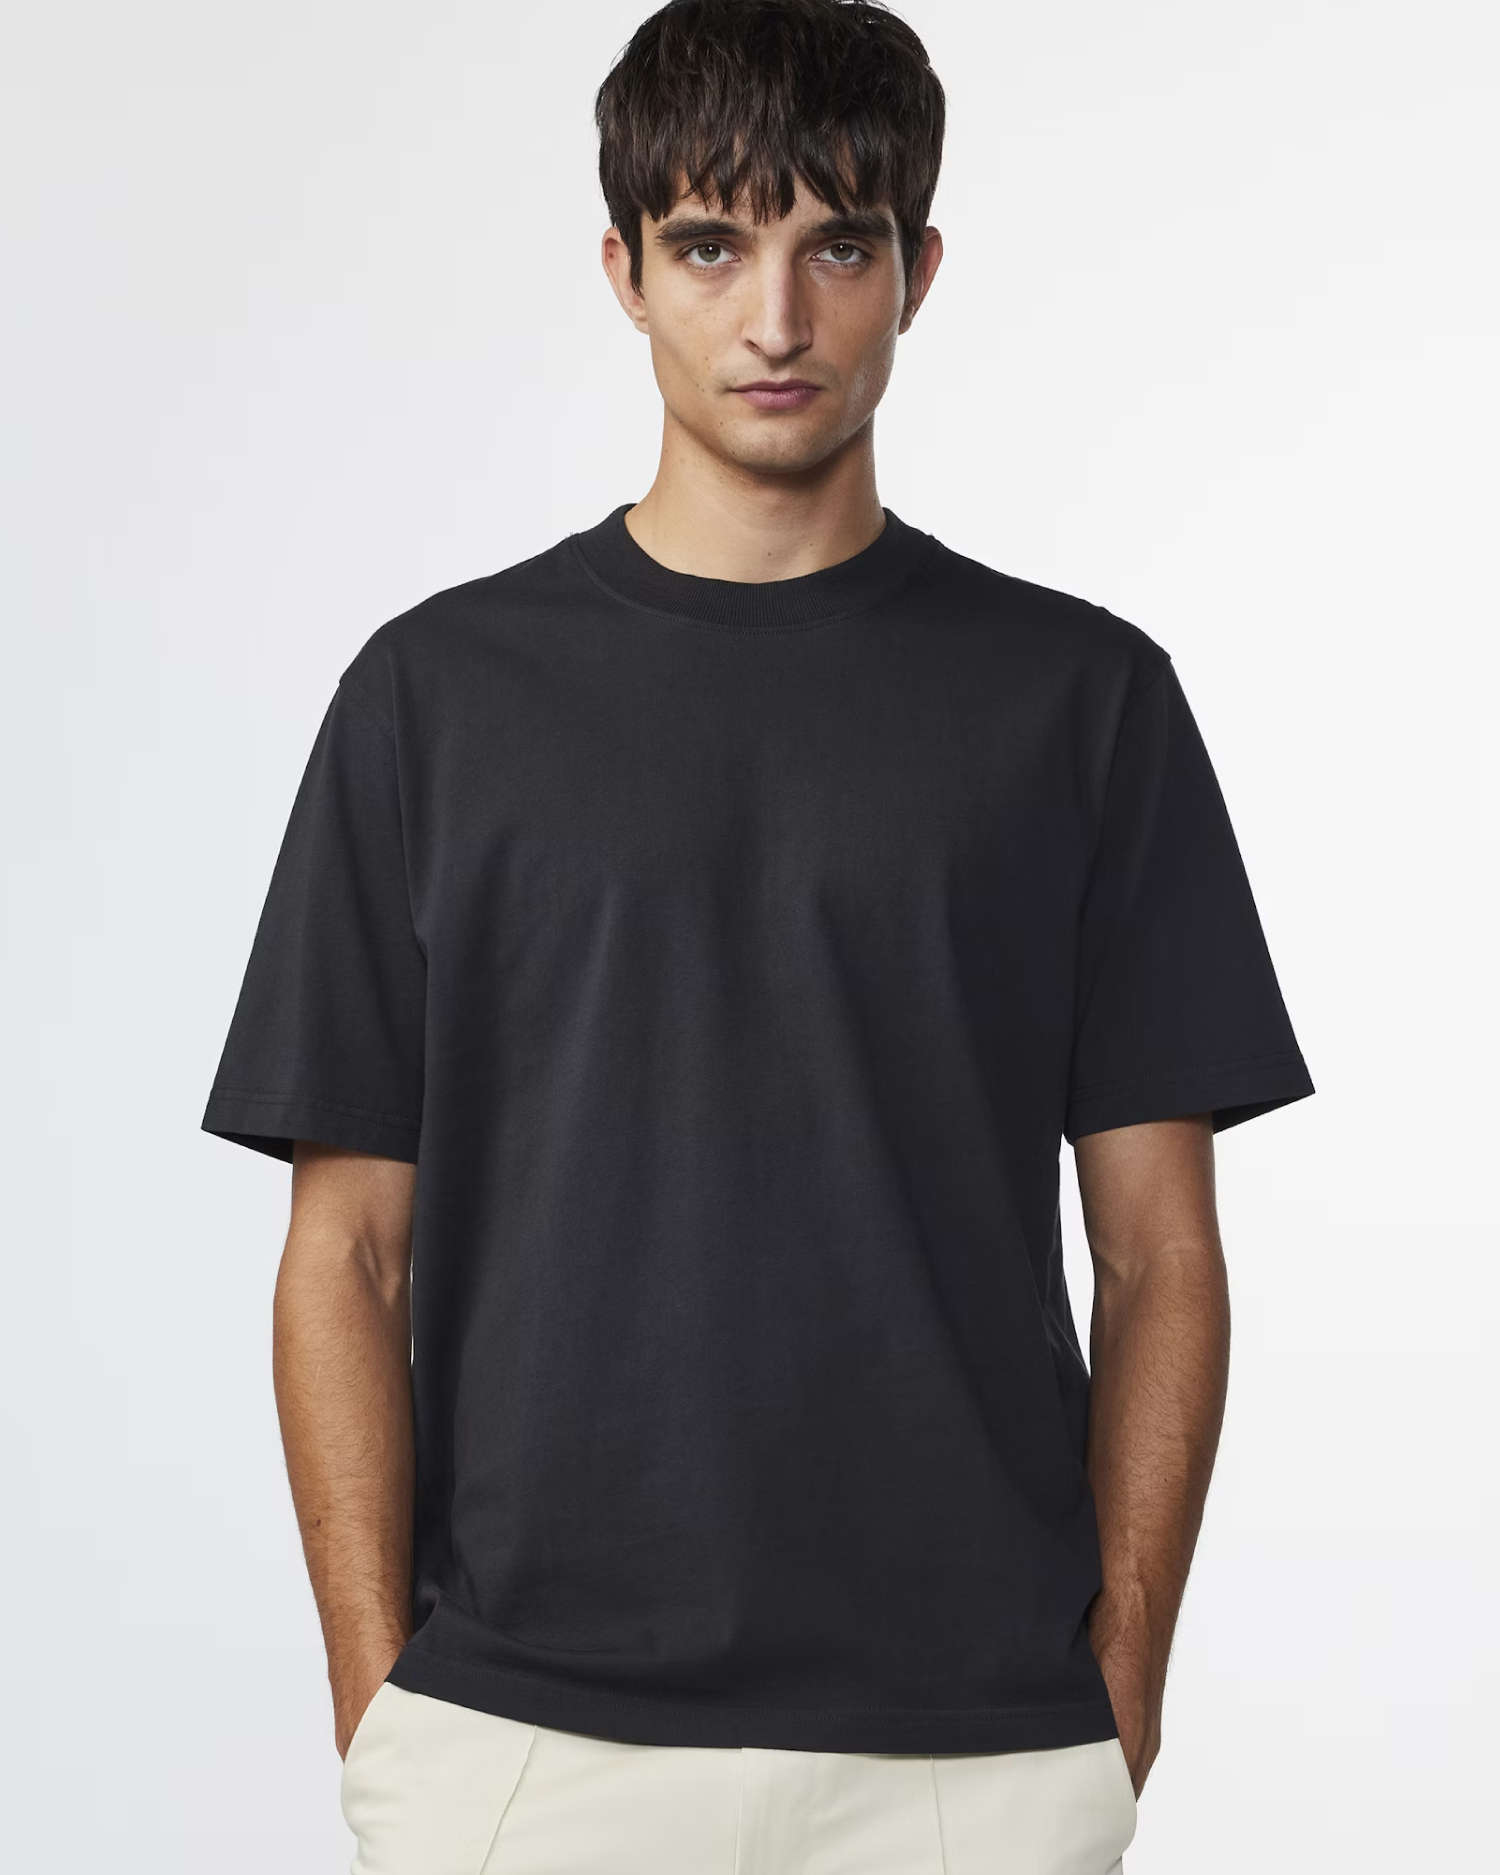 T-shirt Adam 3209 - Black